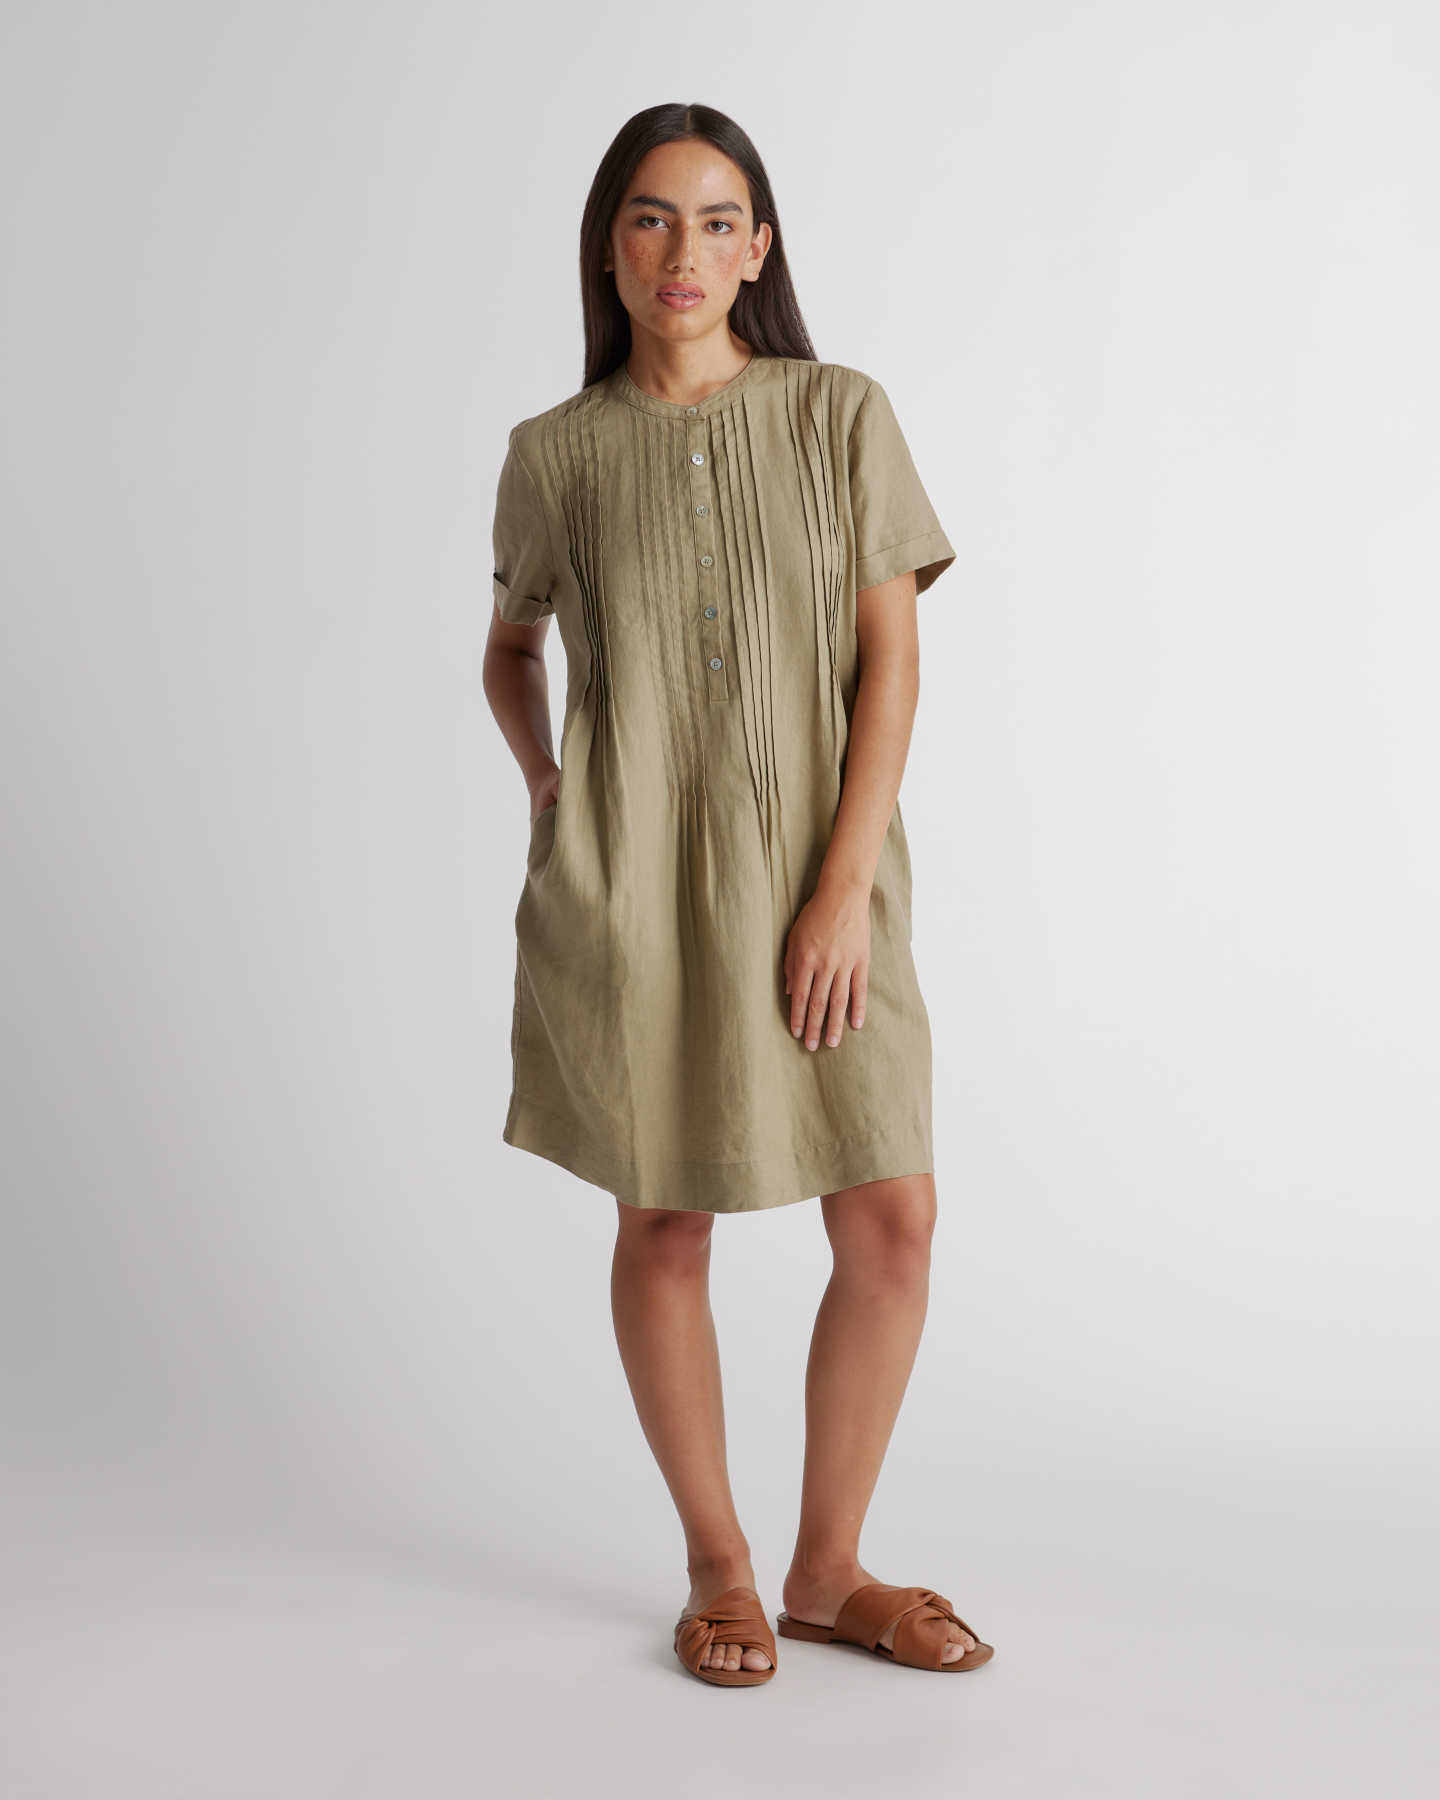 100% European Linen Short Sleeve Swing Dress  - Olive - 4